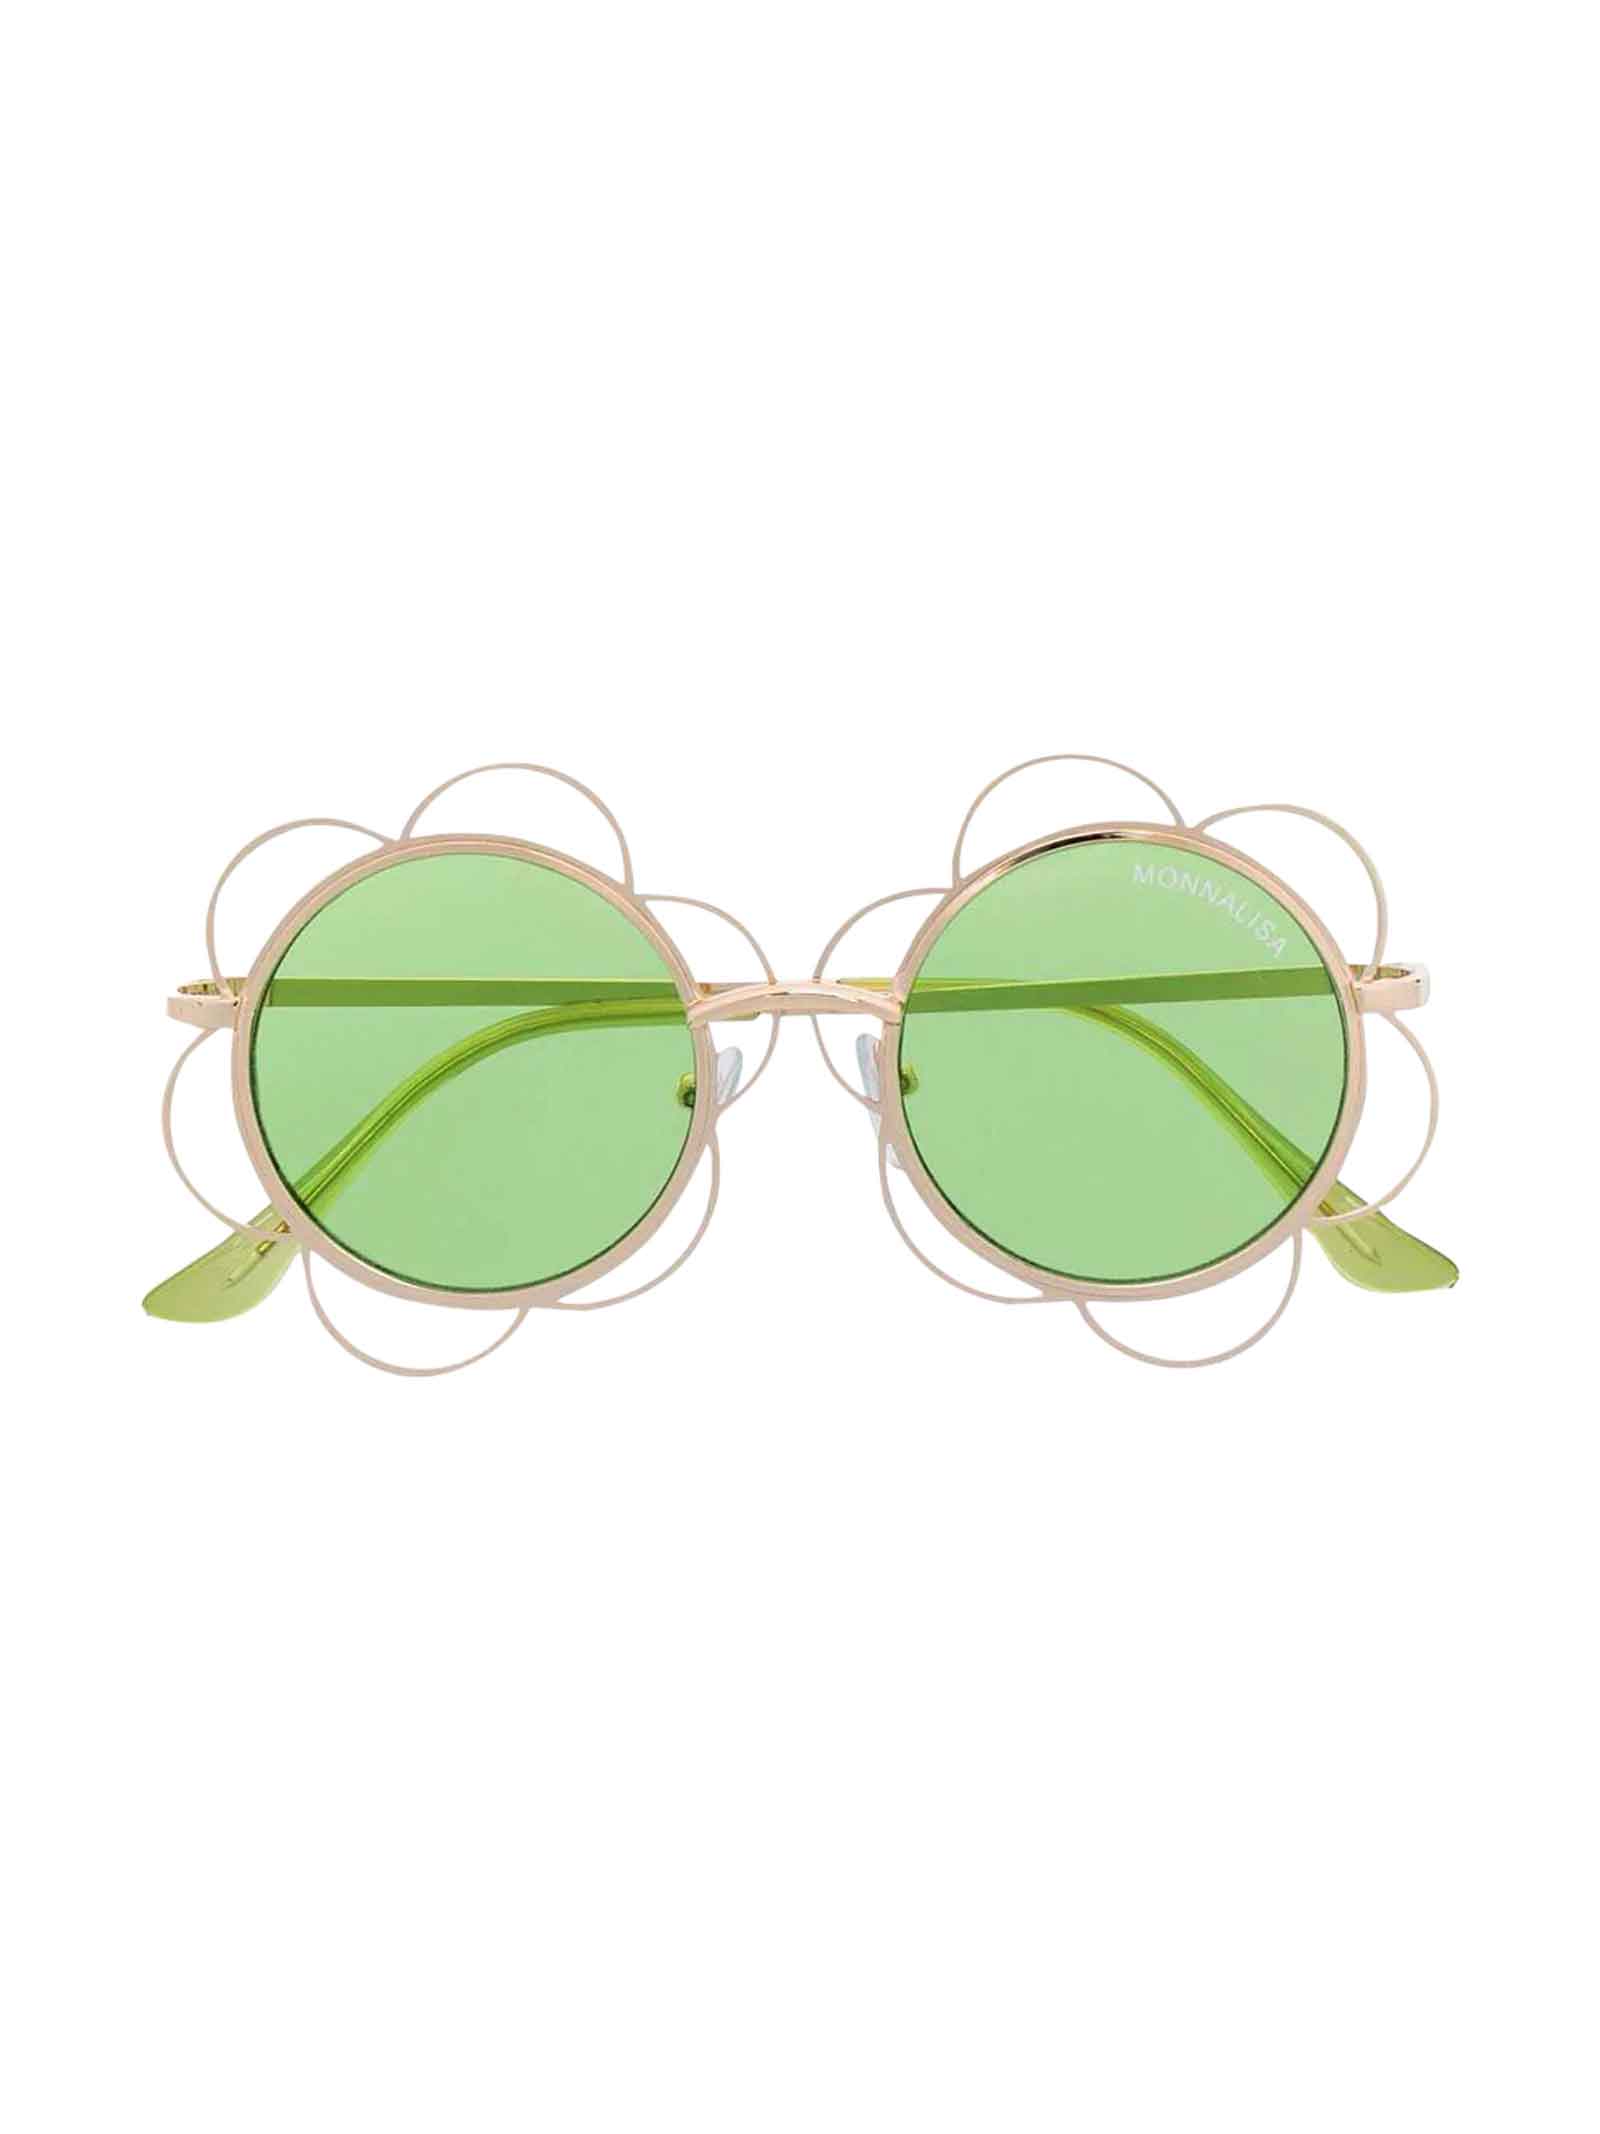 Monnalisa Green Sunglasses Girl